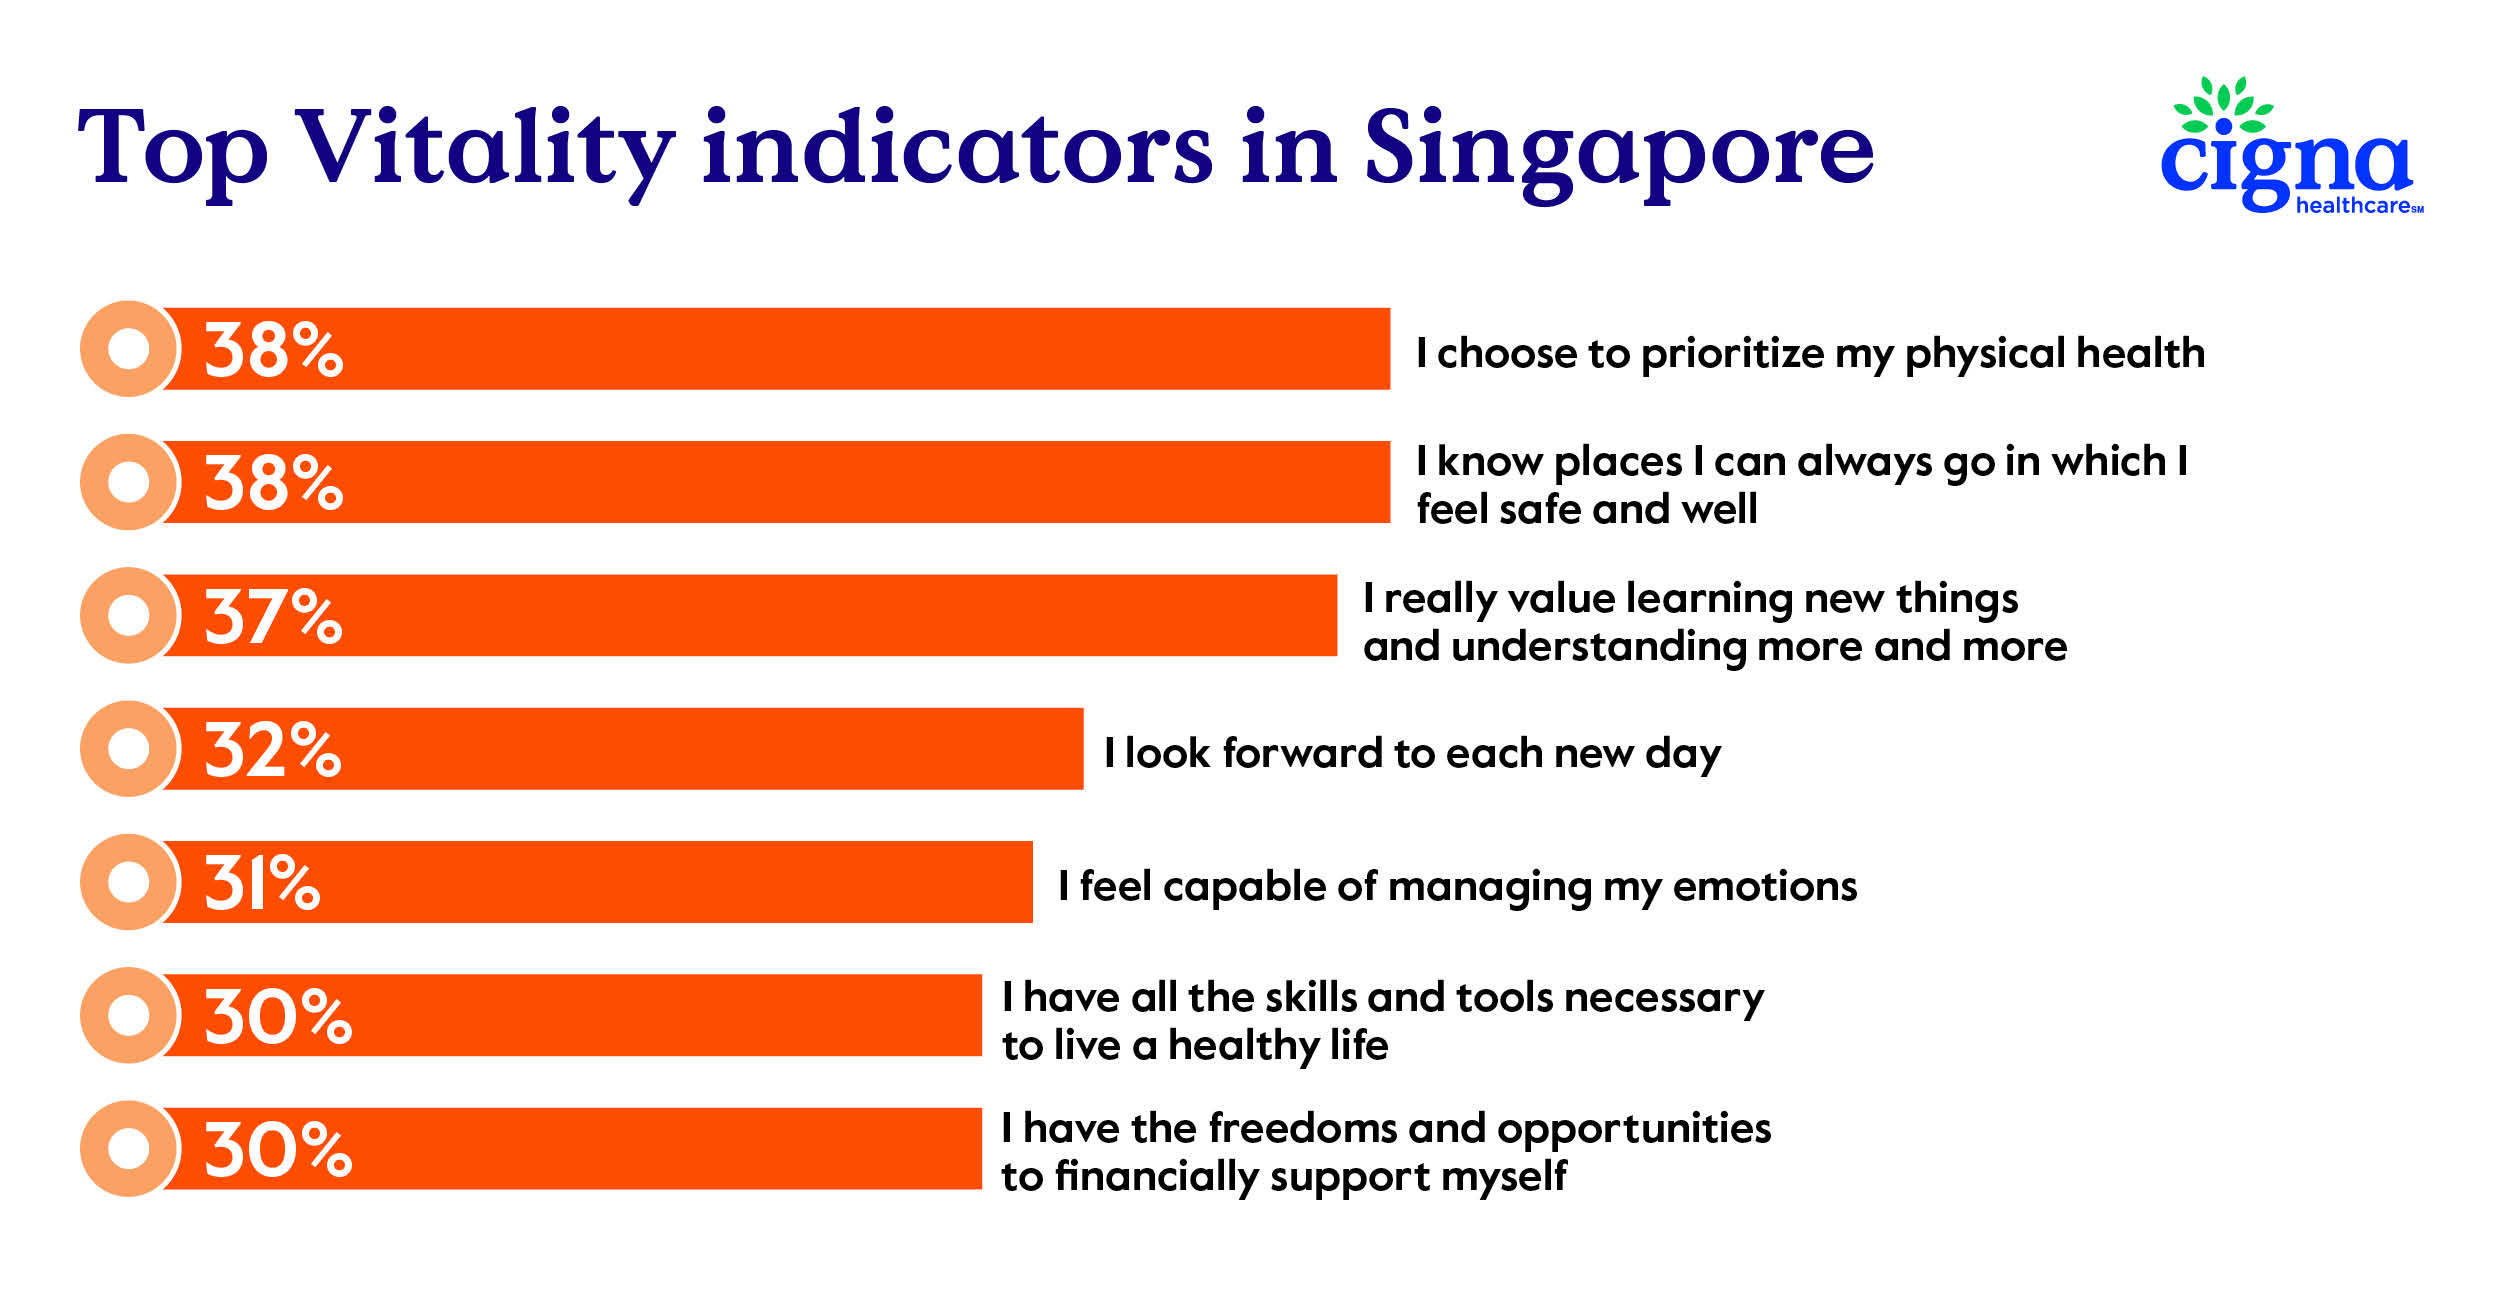 Top Vitality indicators in Singapore